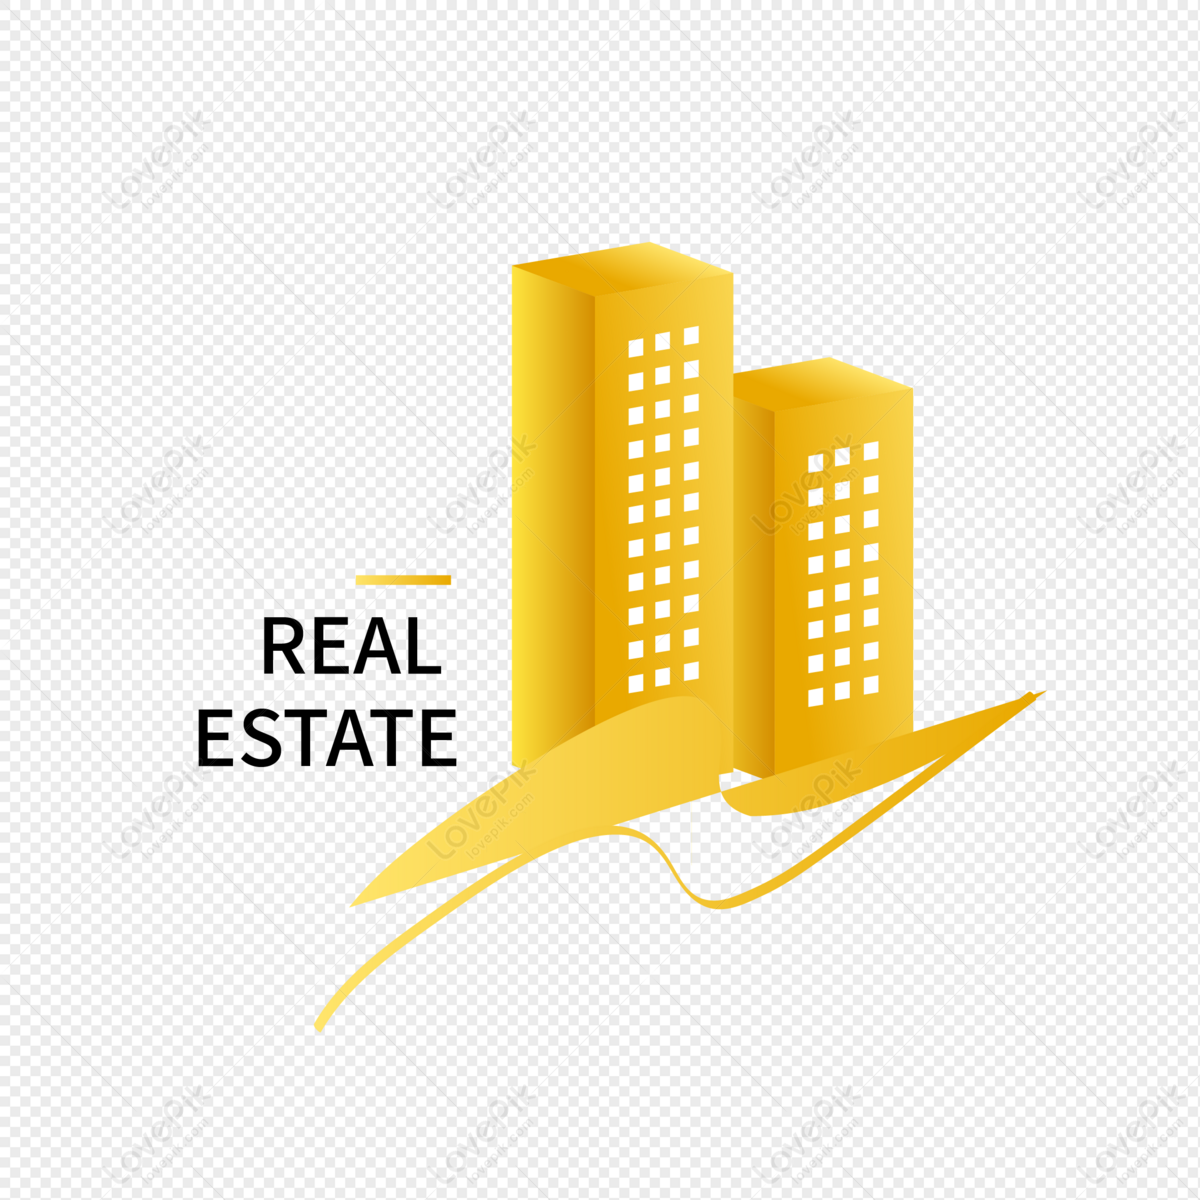 real estate house logo png